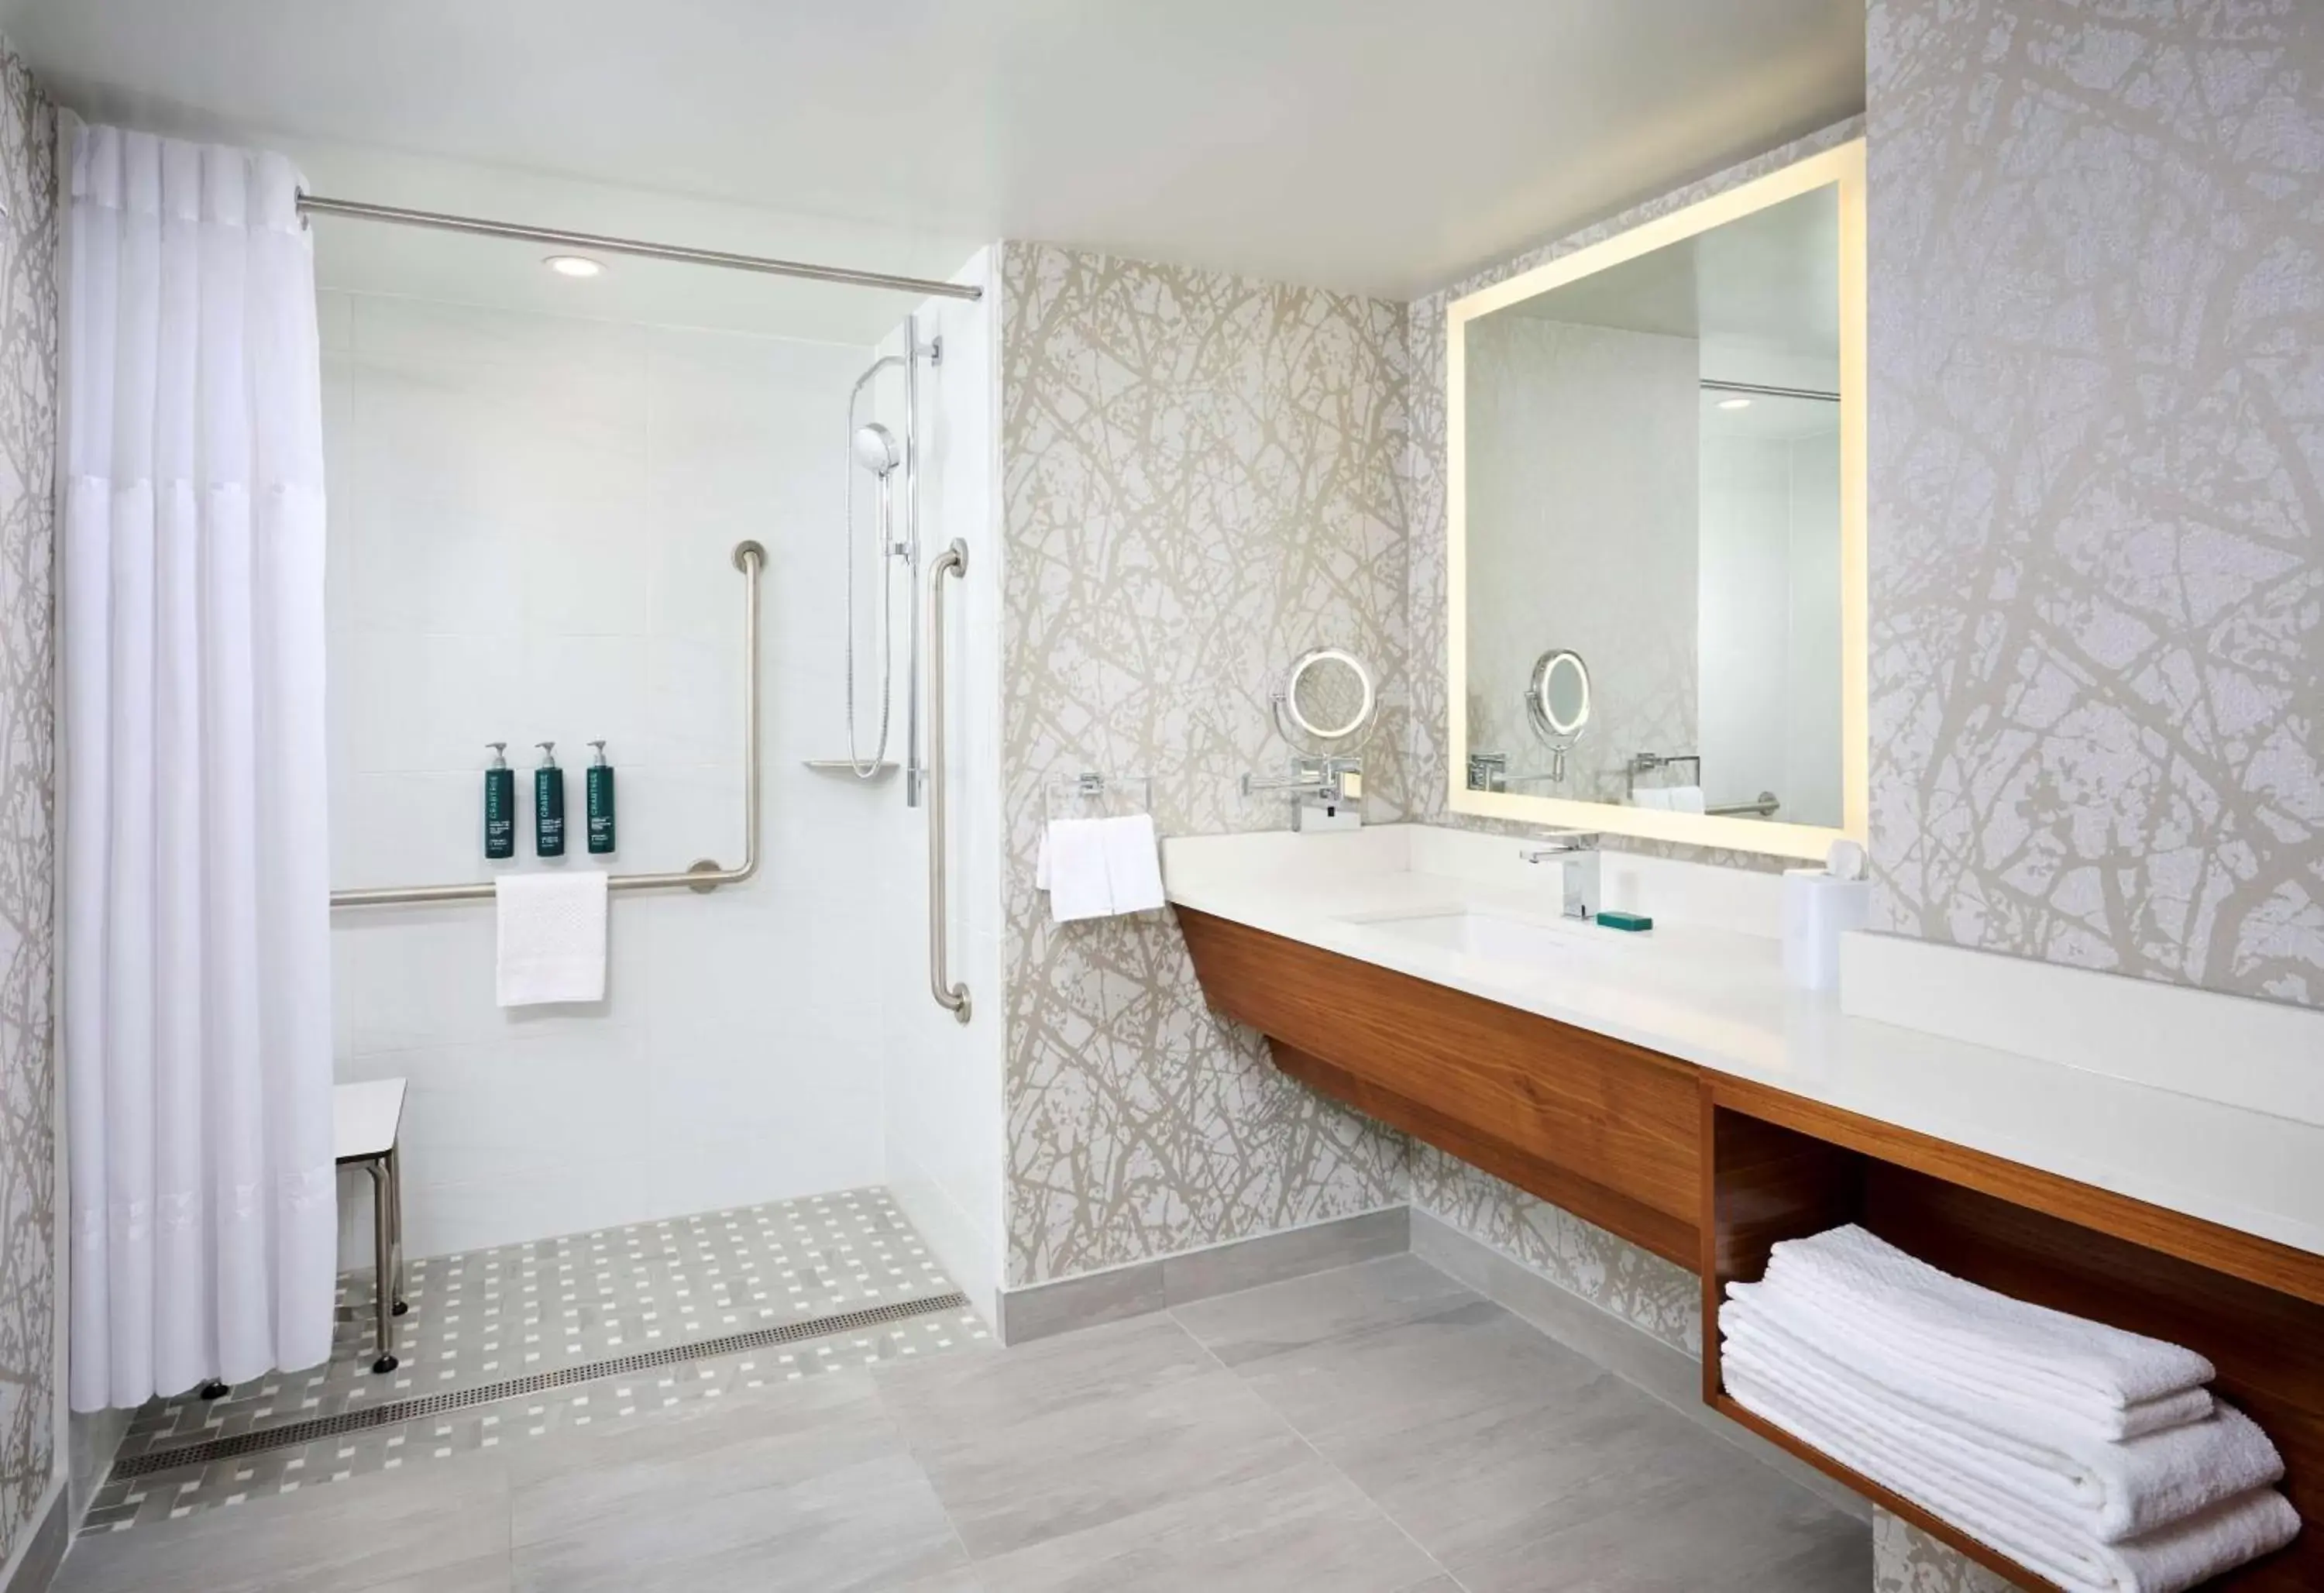 Bathroom in DoubleTree by Hilton Windsor, ON